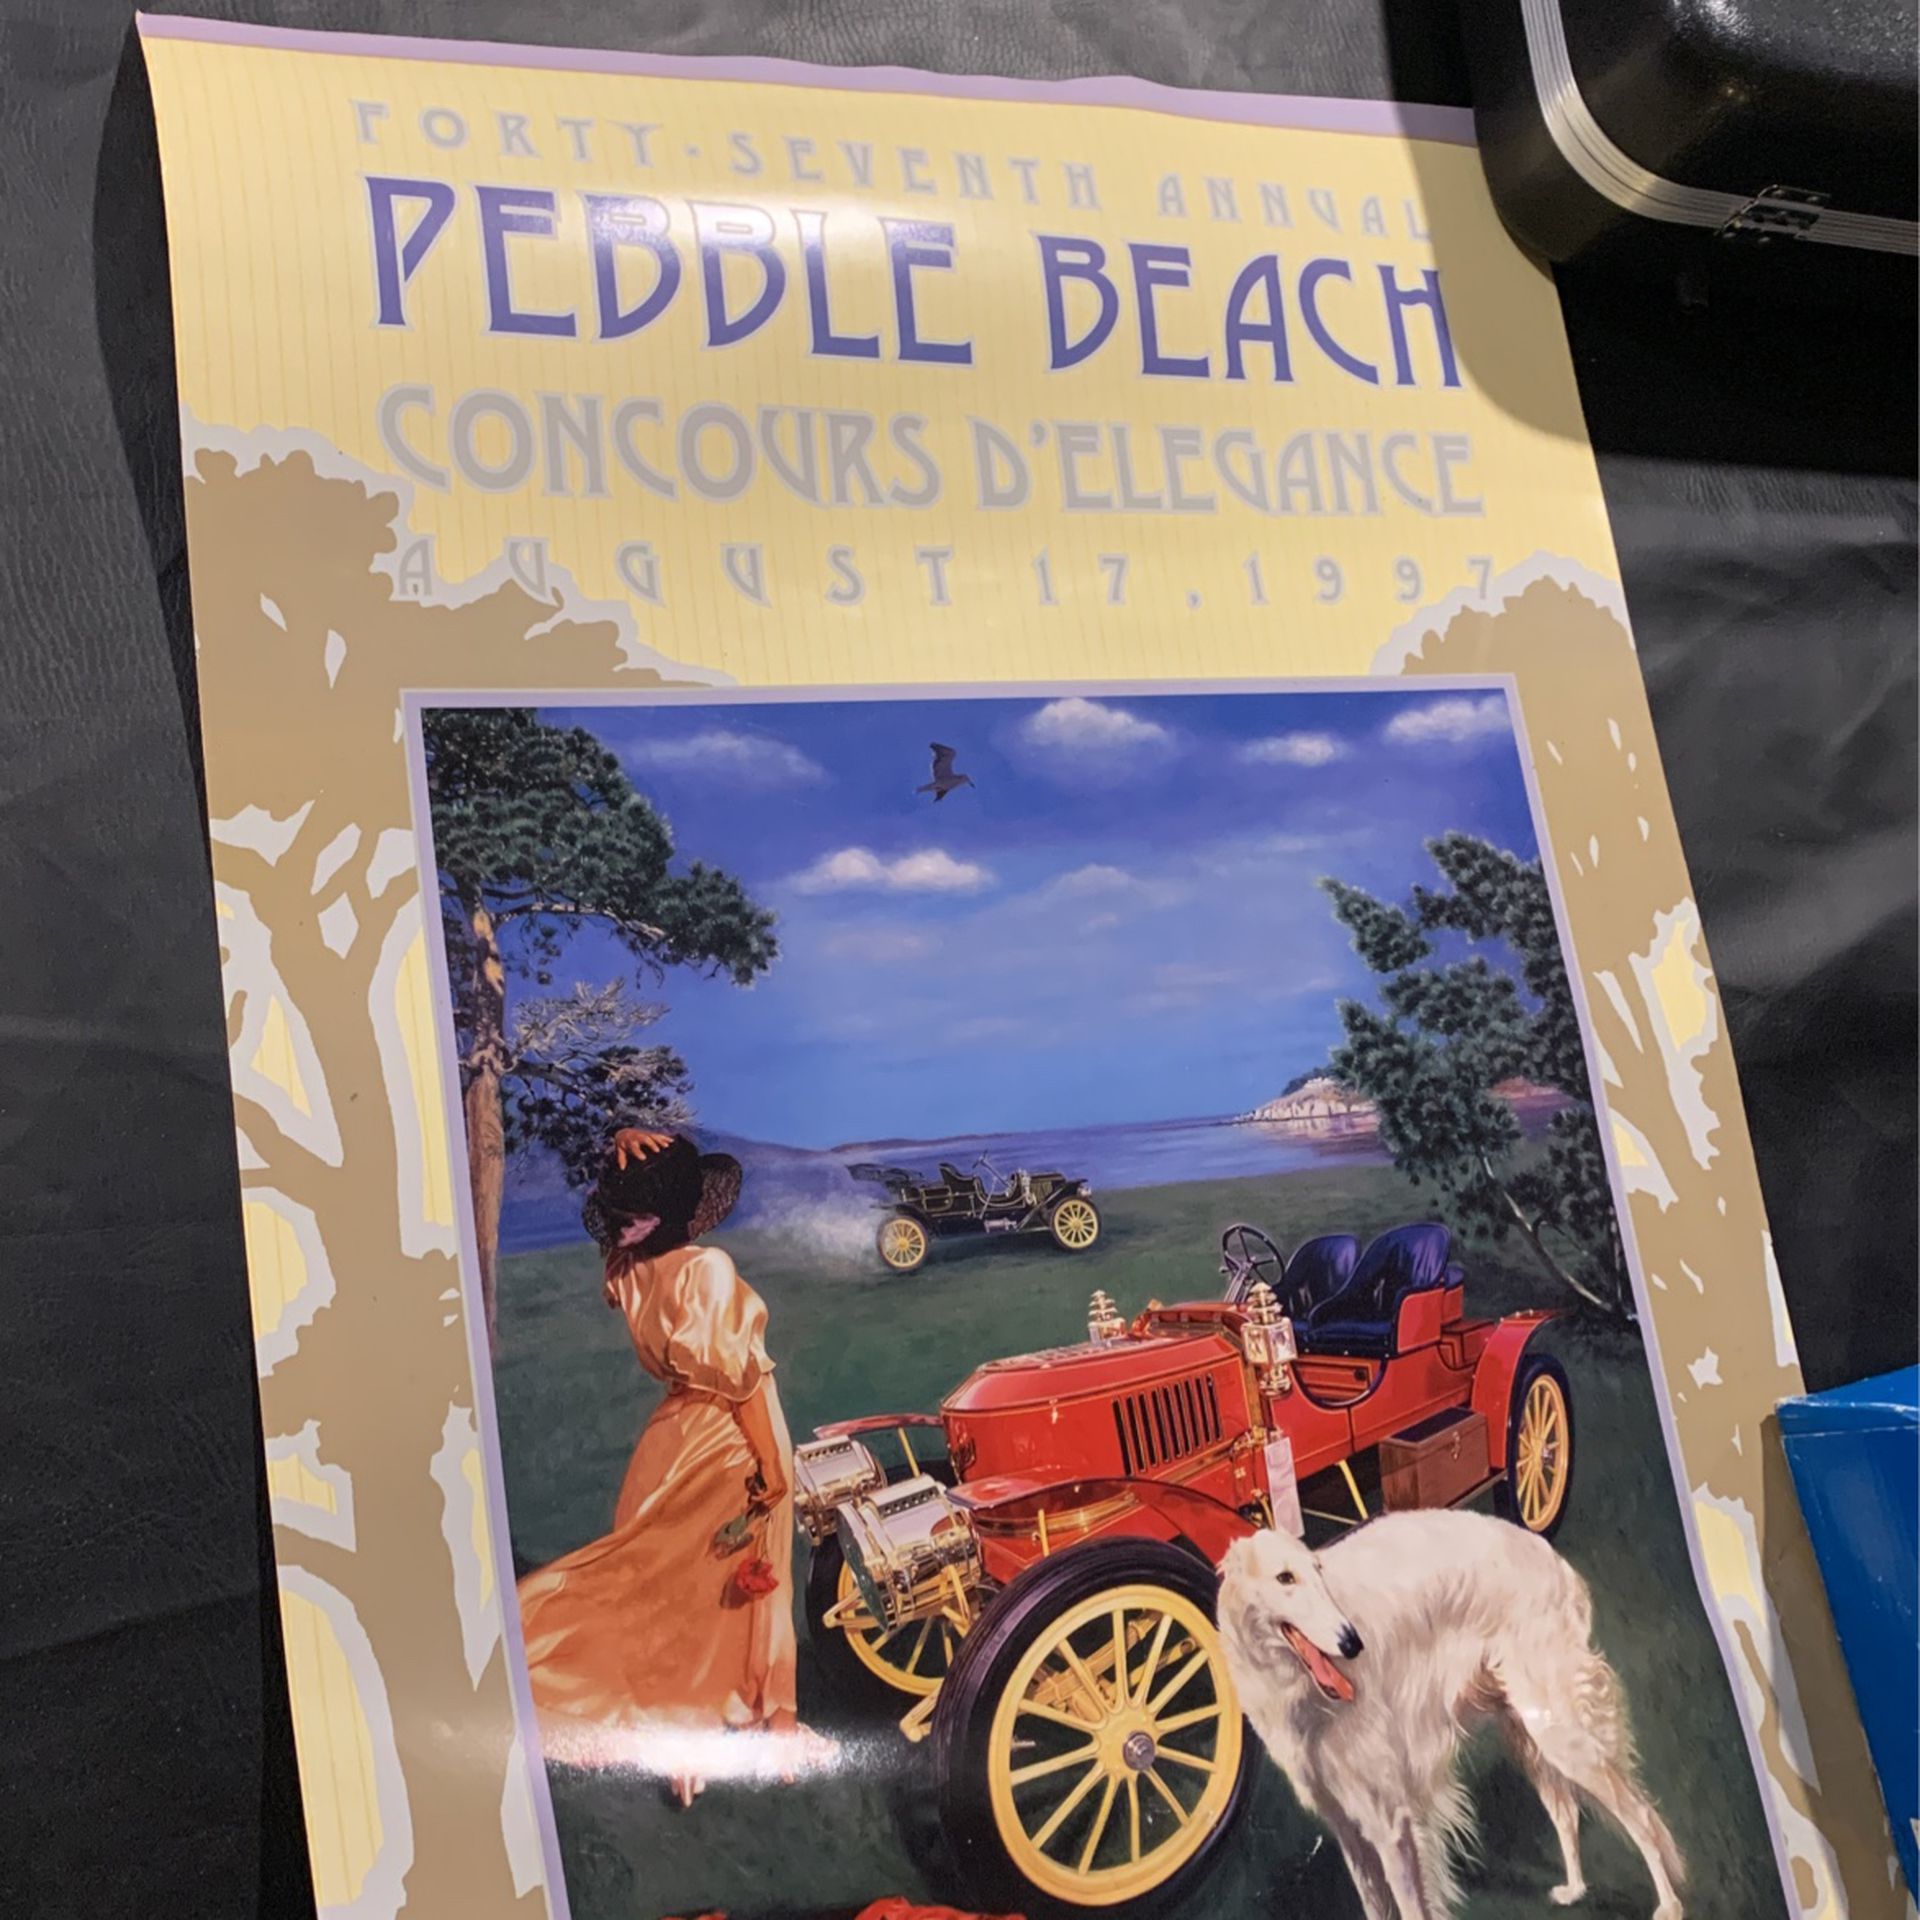 47th annual Pebble Beach Concourse D elegance poster